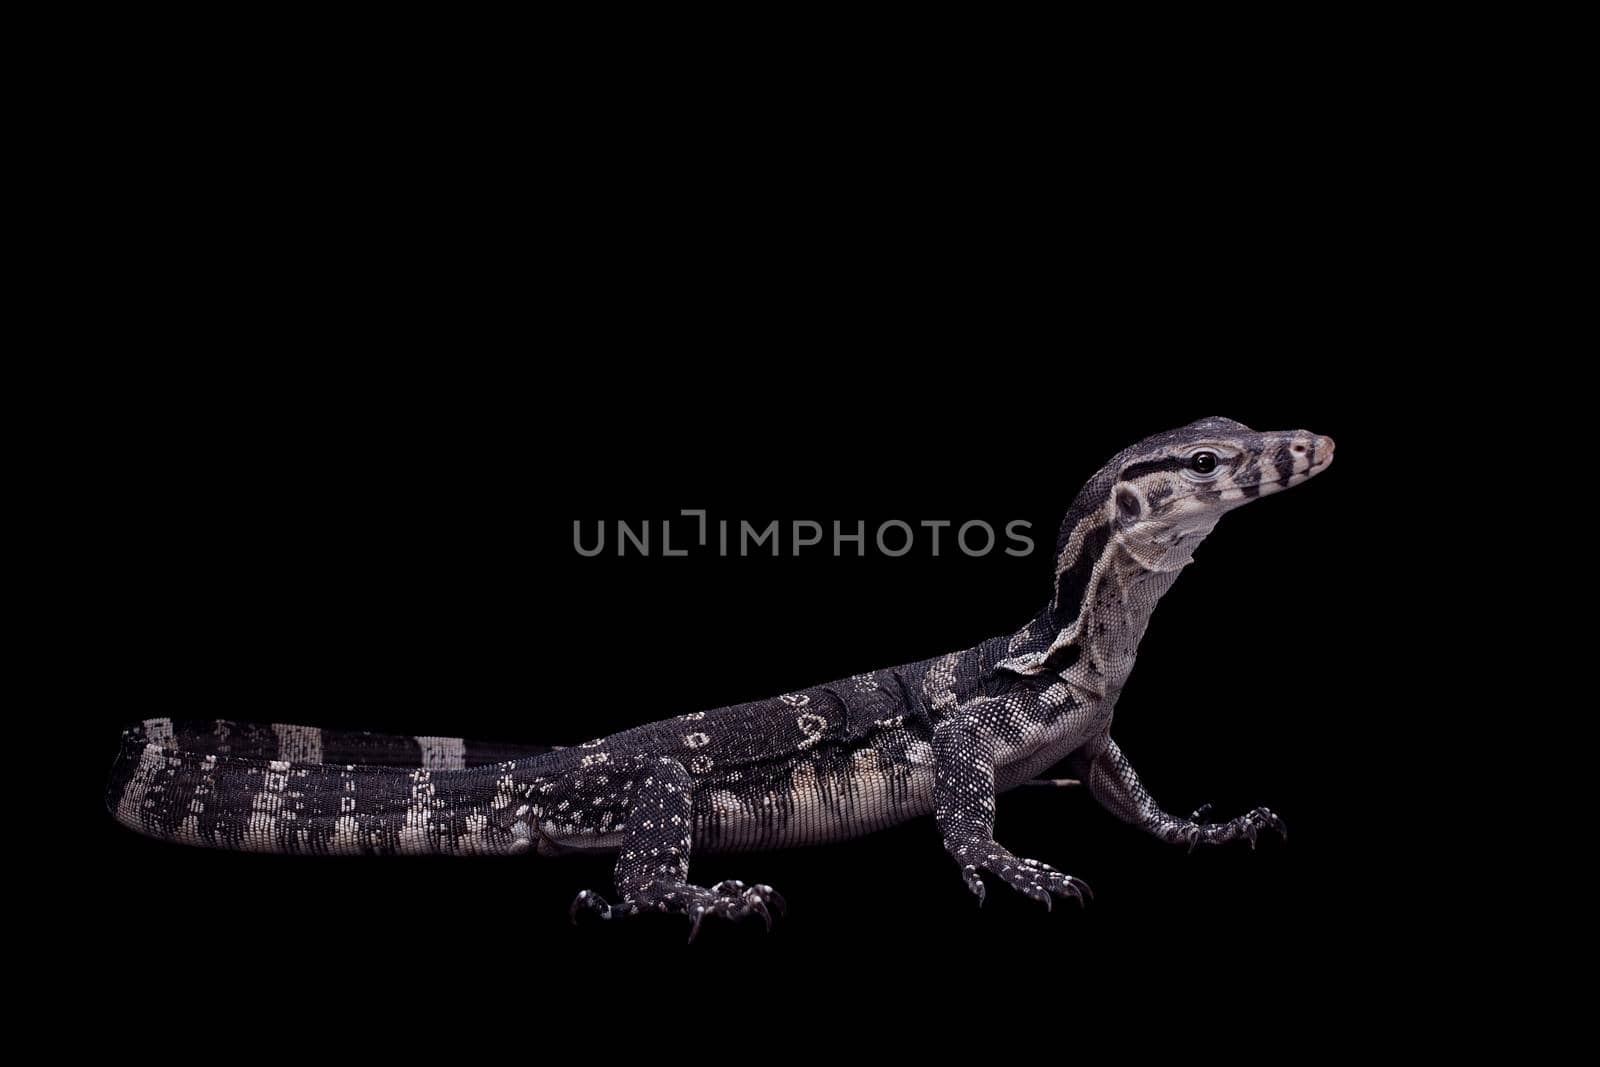 Timor Monitor Lizard, Varanus timorensis, on black by RosaJay